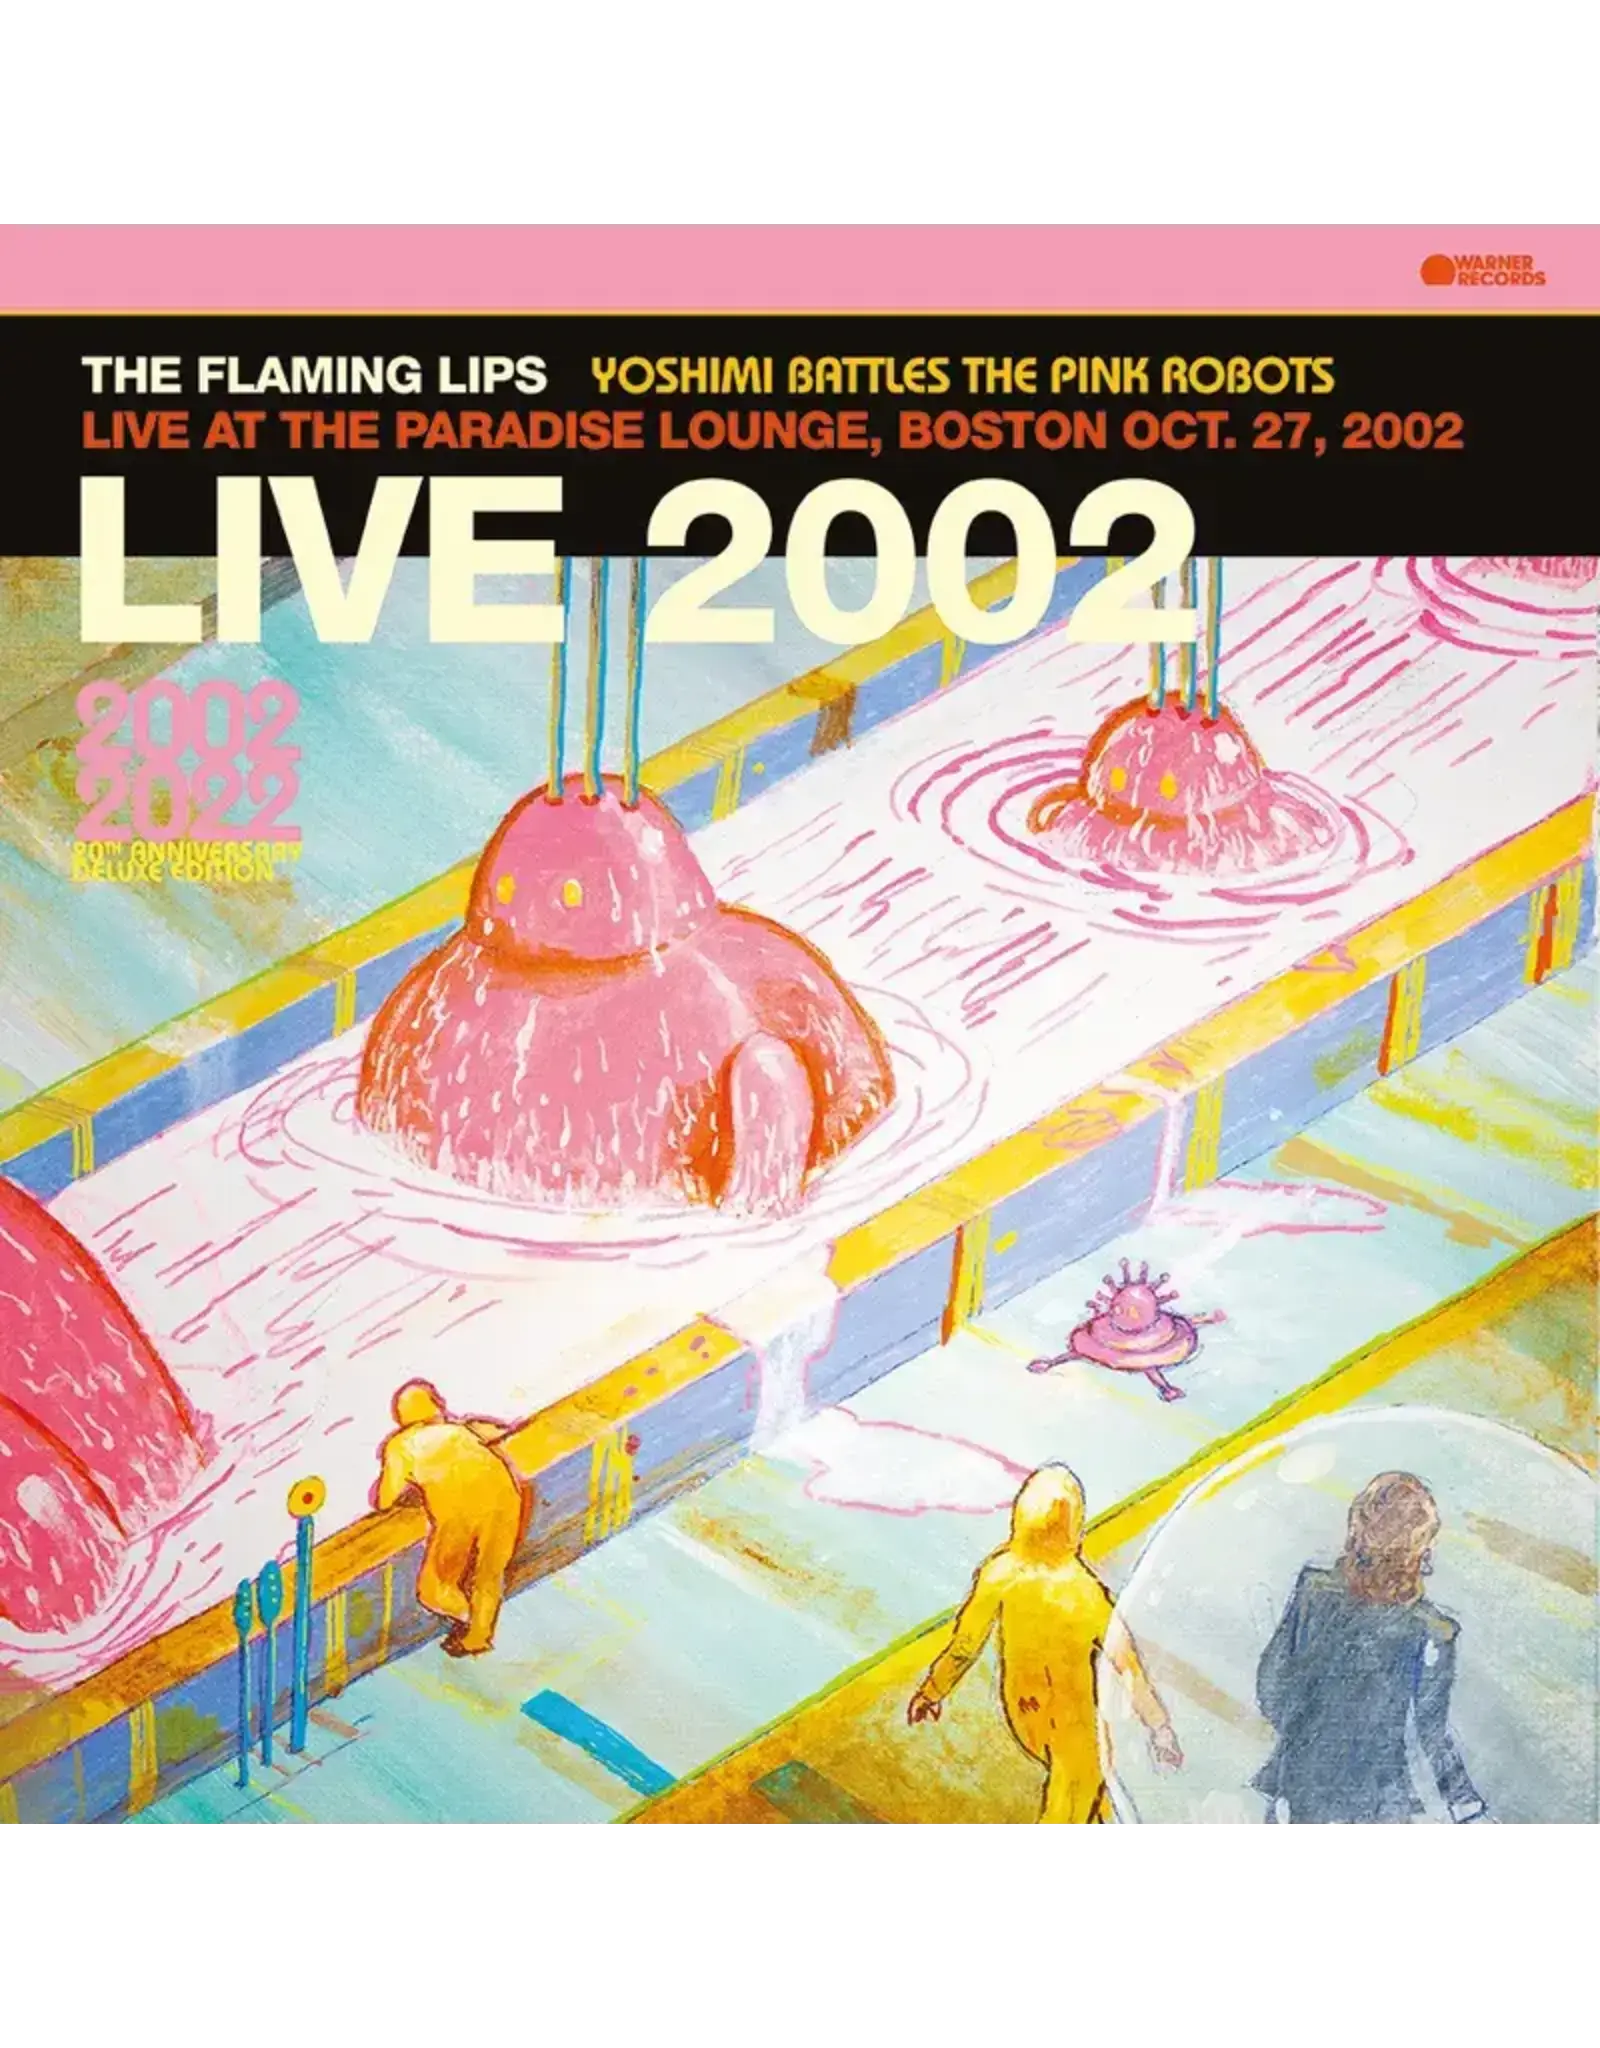 Rock/Pop Flaming Lips - Live 2002 (Paradise Lounge, Boston Oct. 27, 2002) (Pink Vinyl)